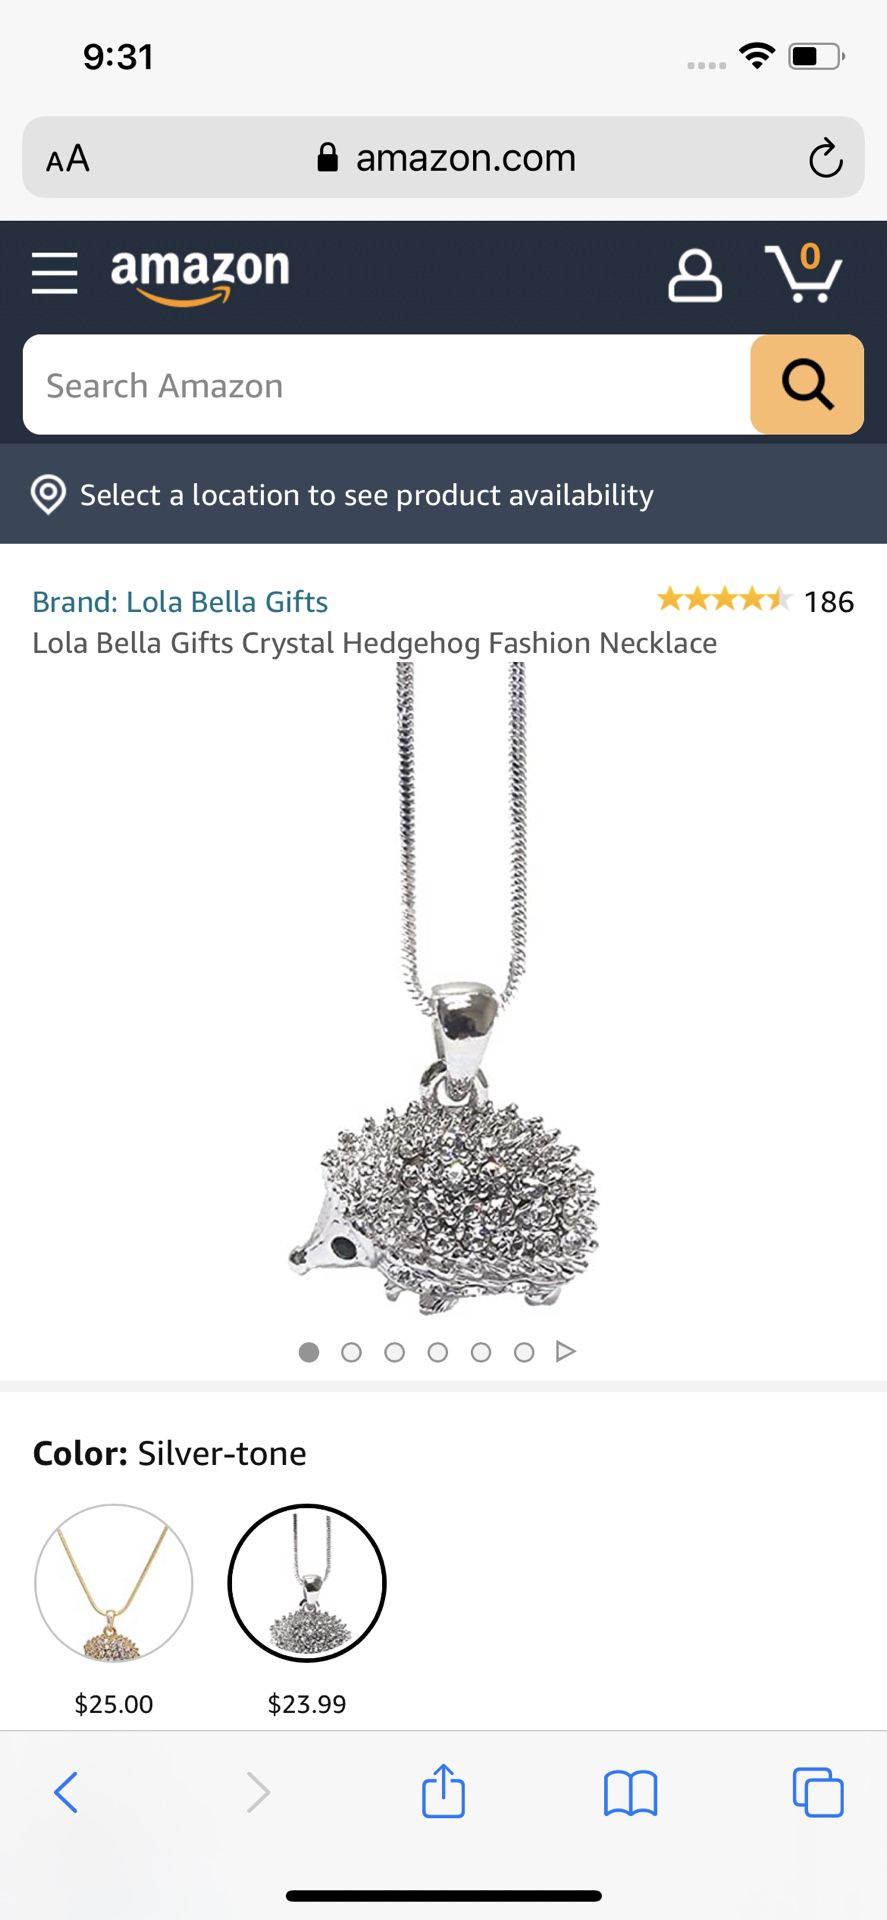 Lola Bella Gifts Crystal Hedgehog Fashion Necklace